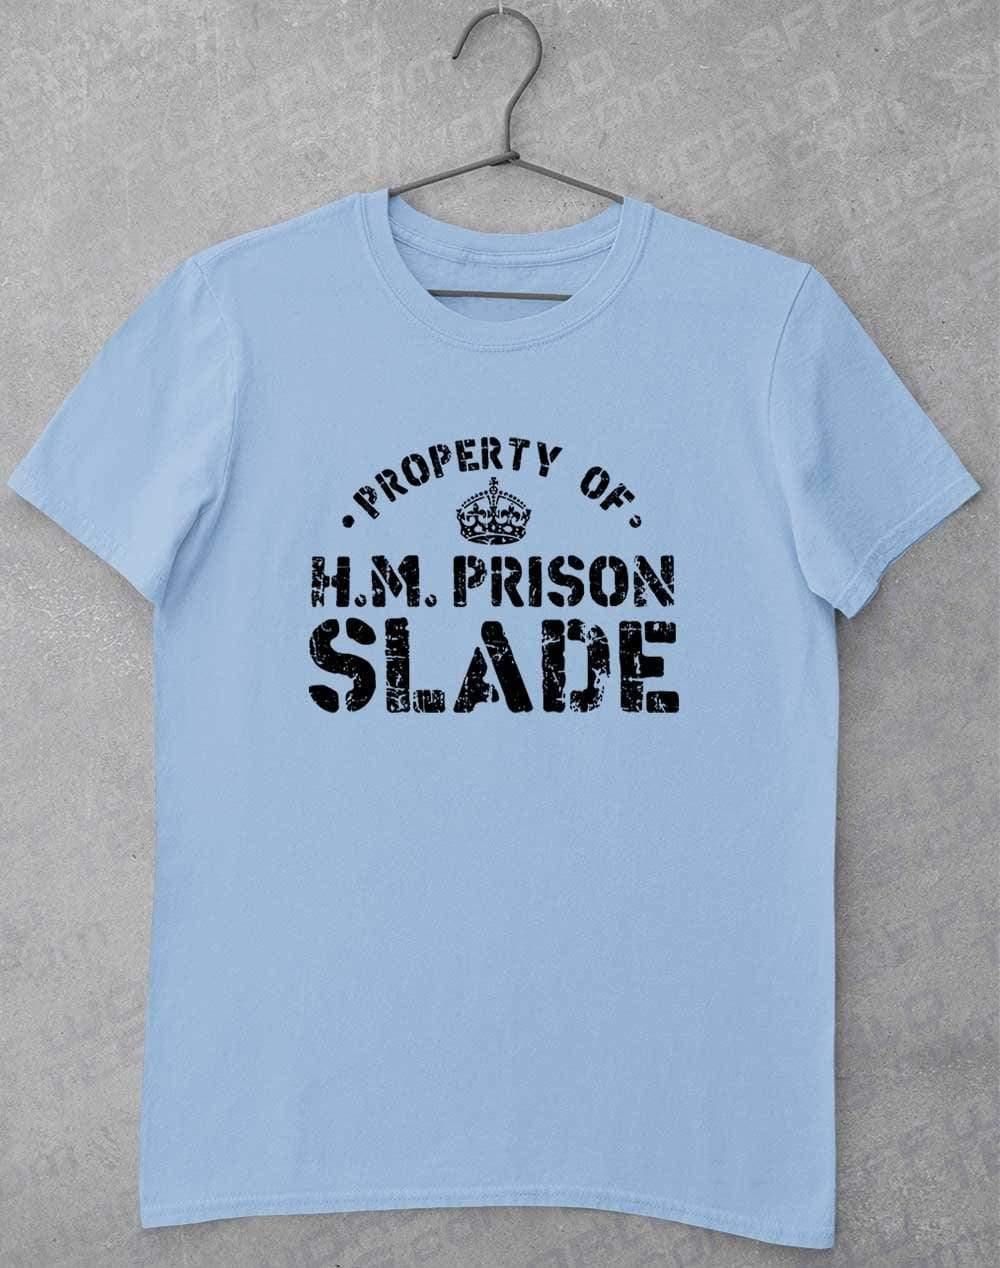 HM Prison Slade T-Shirt S / Light Blue  - Off World Tees